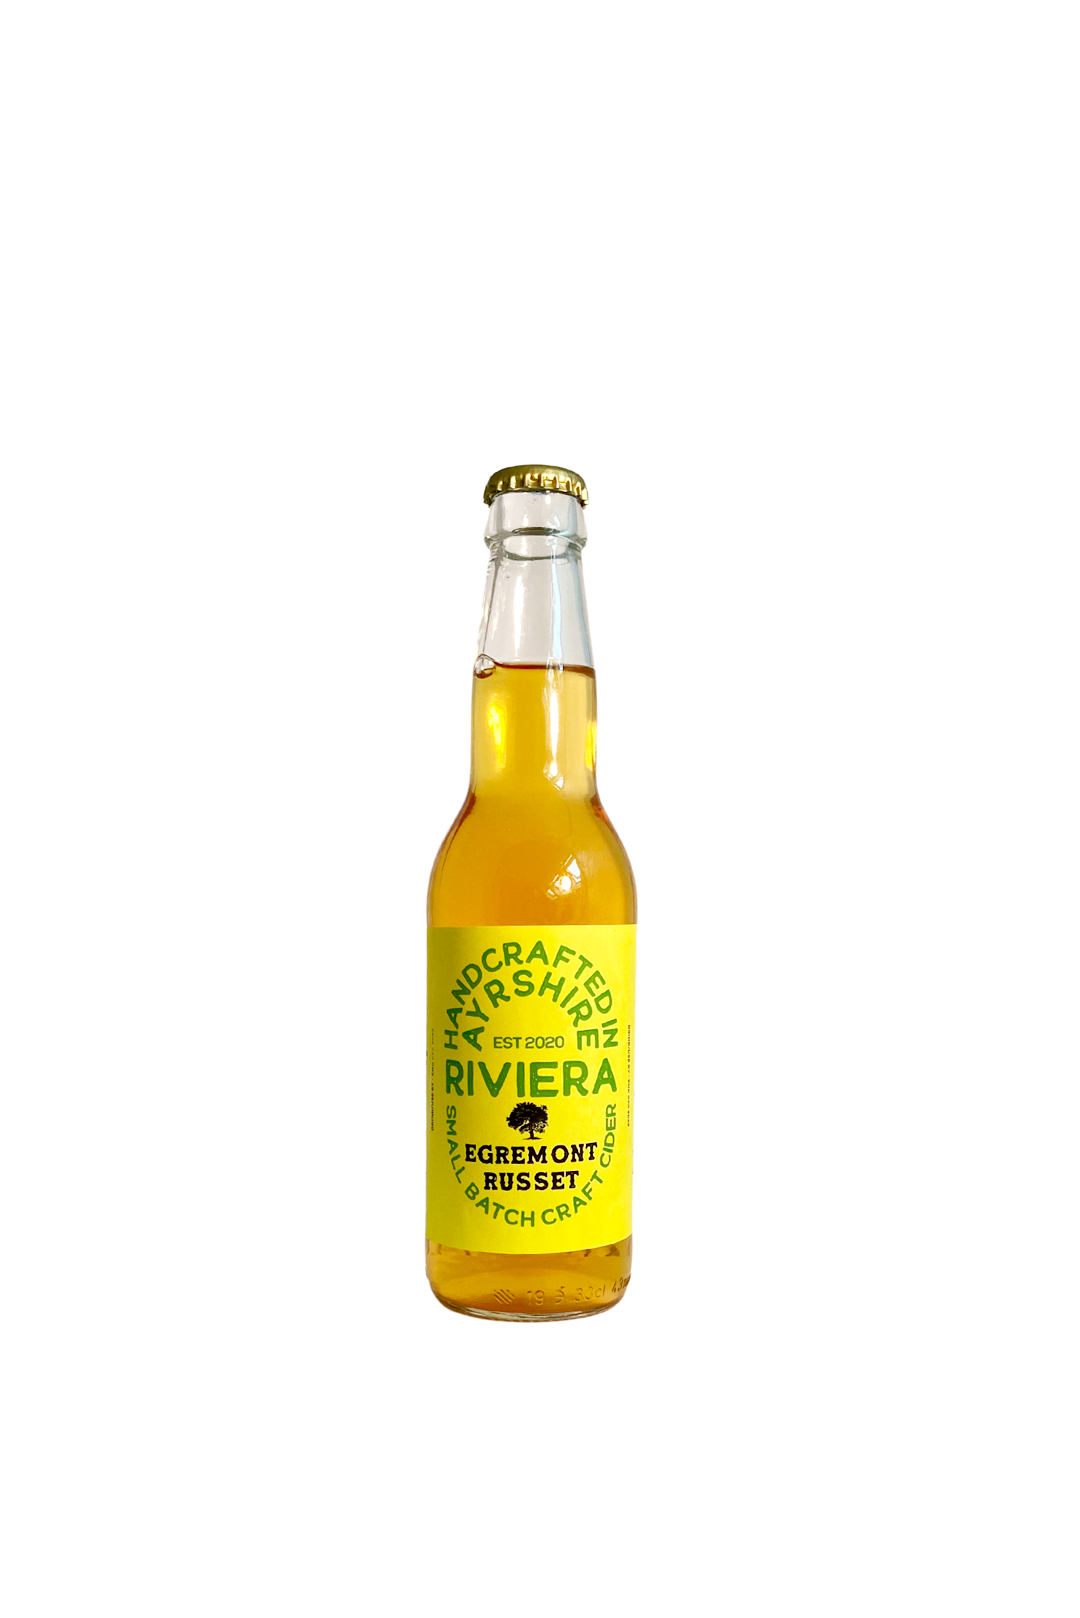 Ayrshire Riviera Cider - Egremont Russet